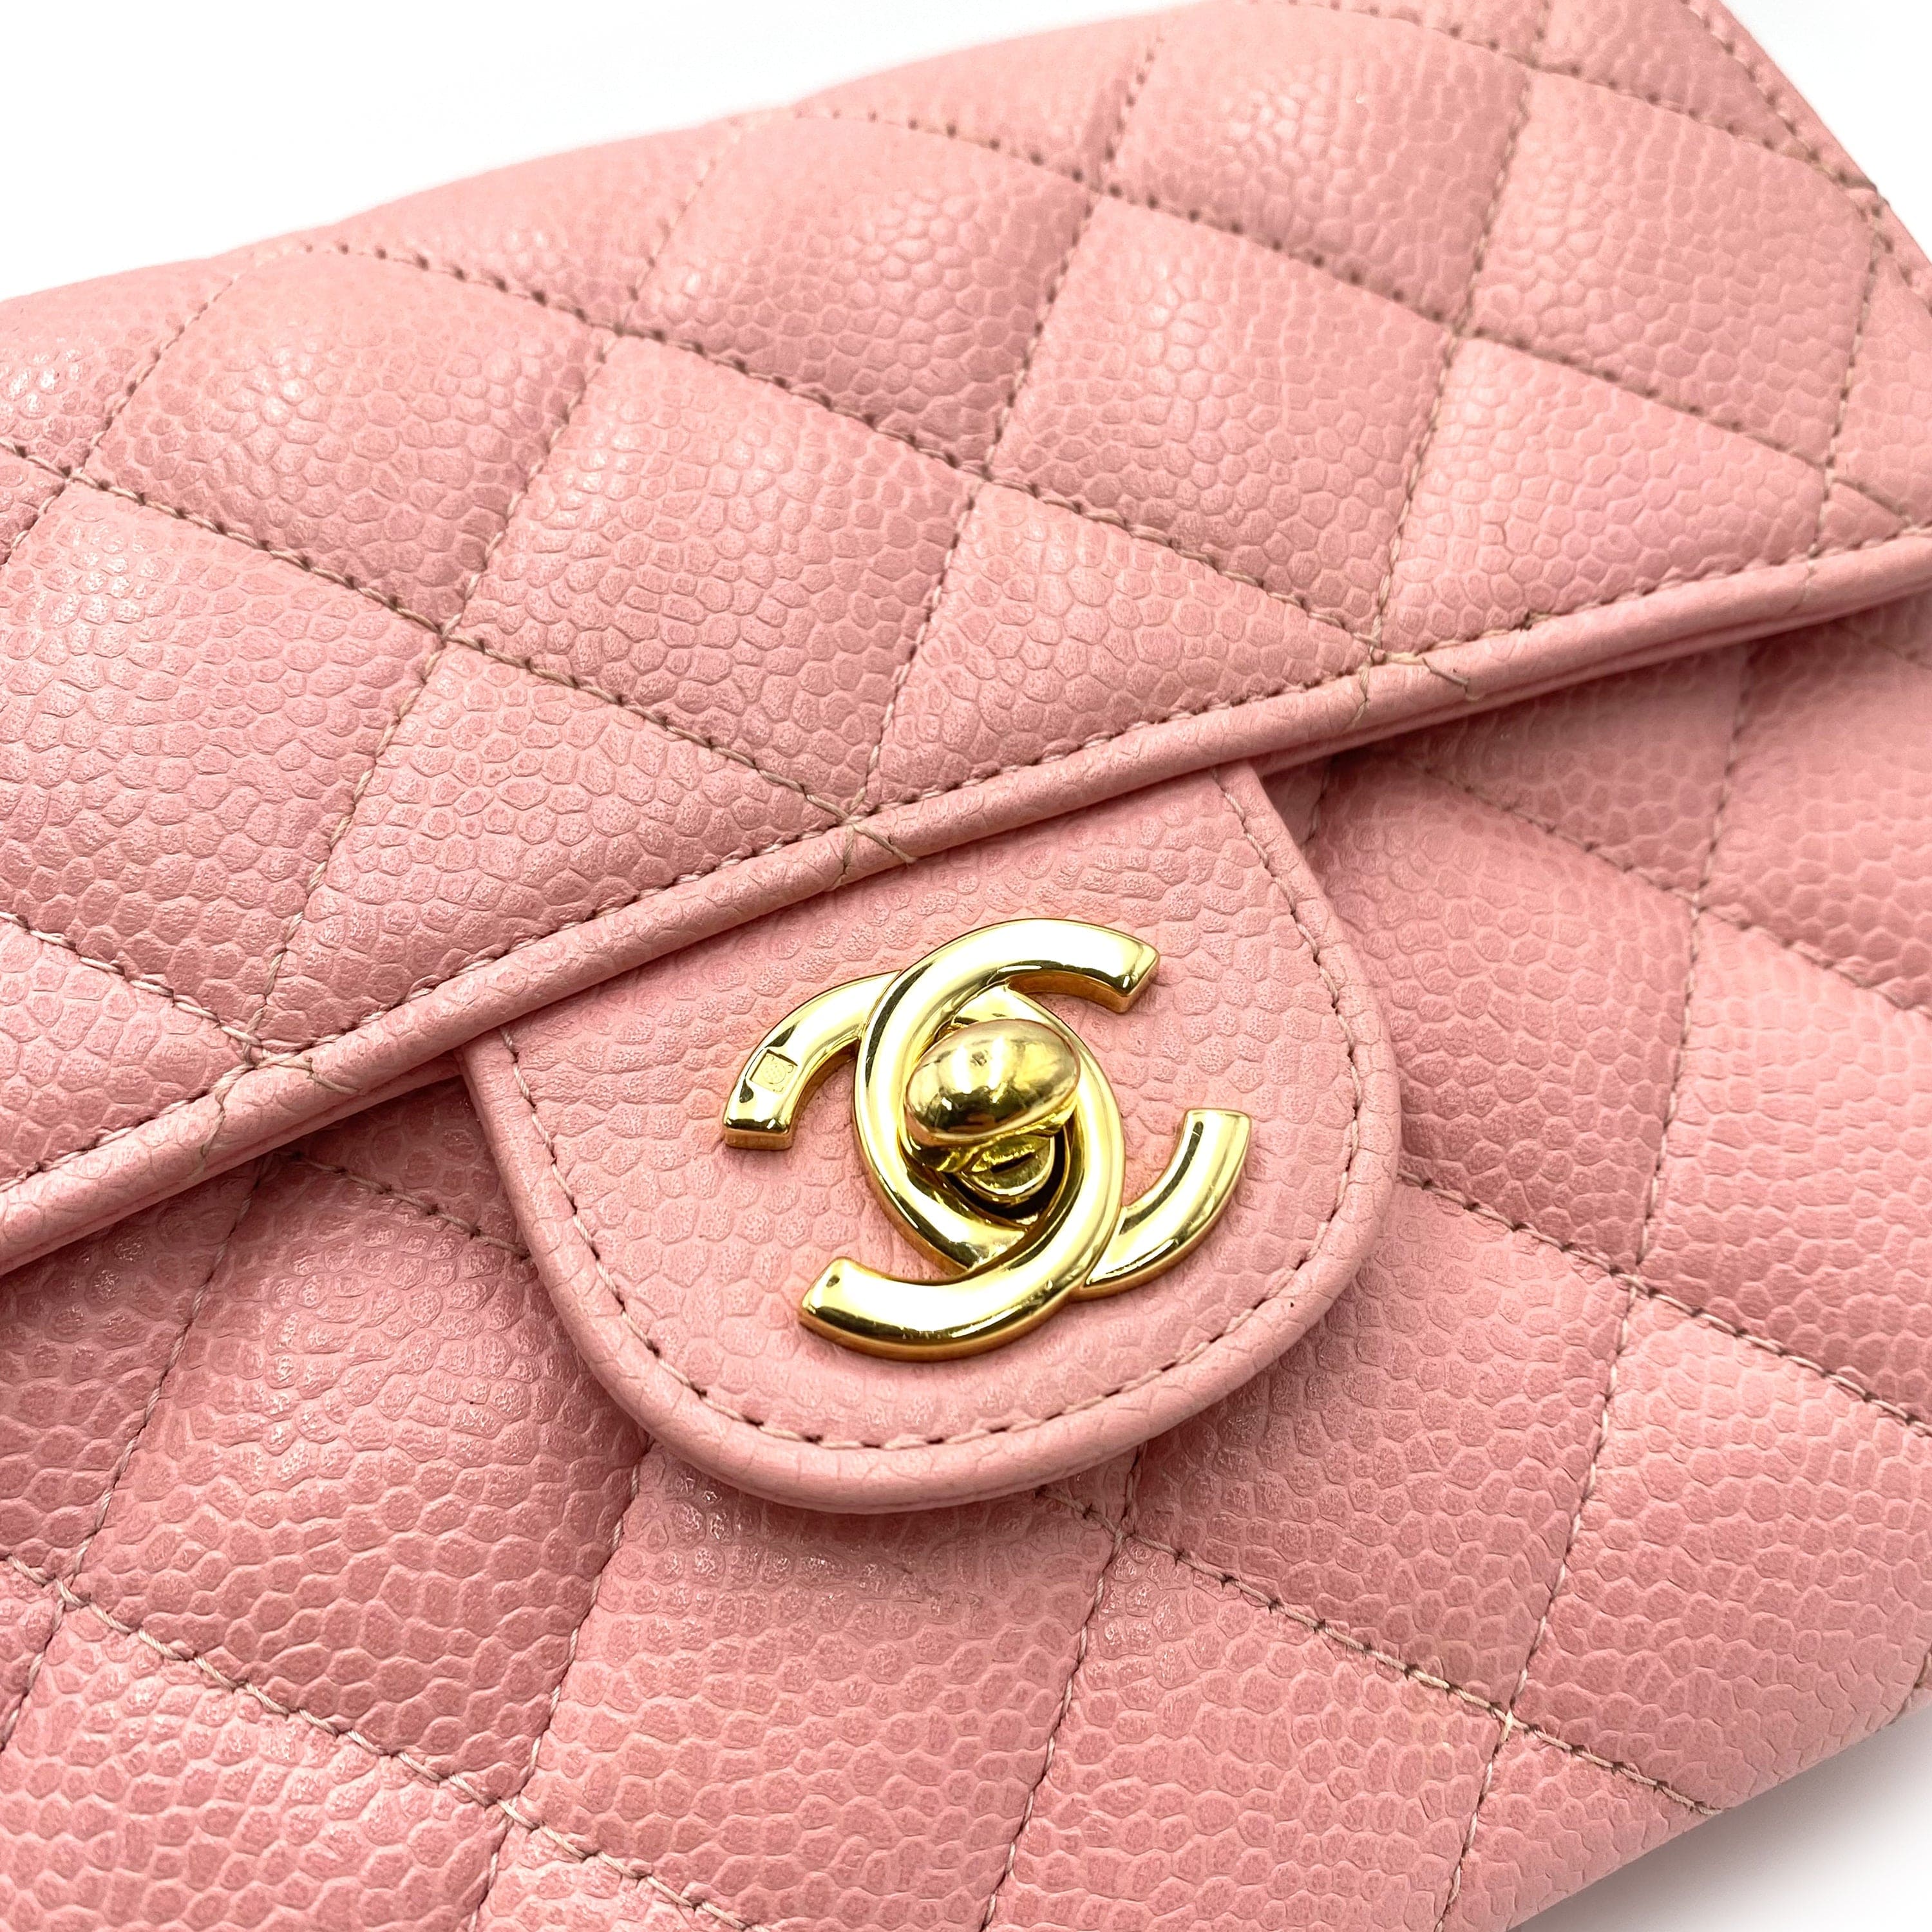 Chanel Chanel Vintage Mini Square Pink Caviar GHW #9 90230894